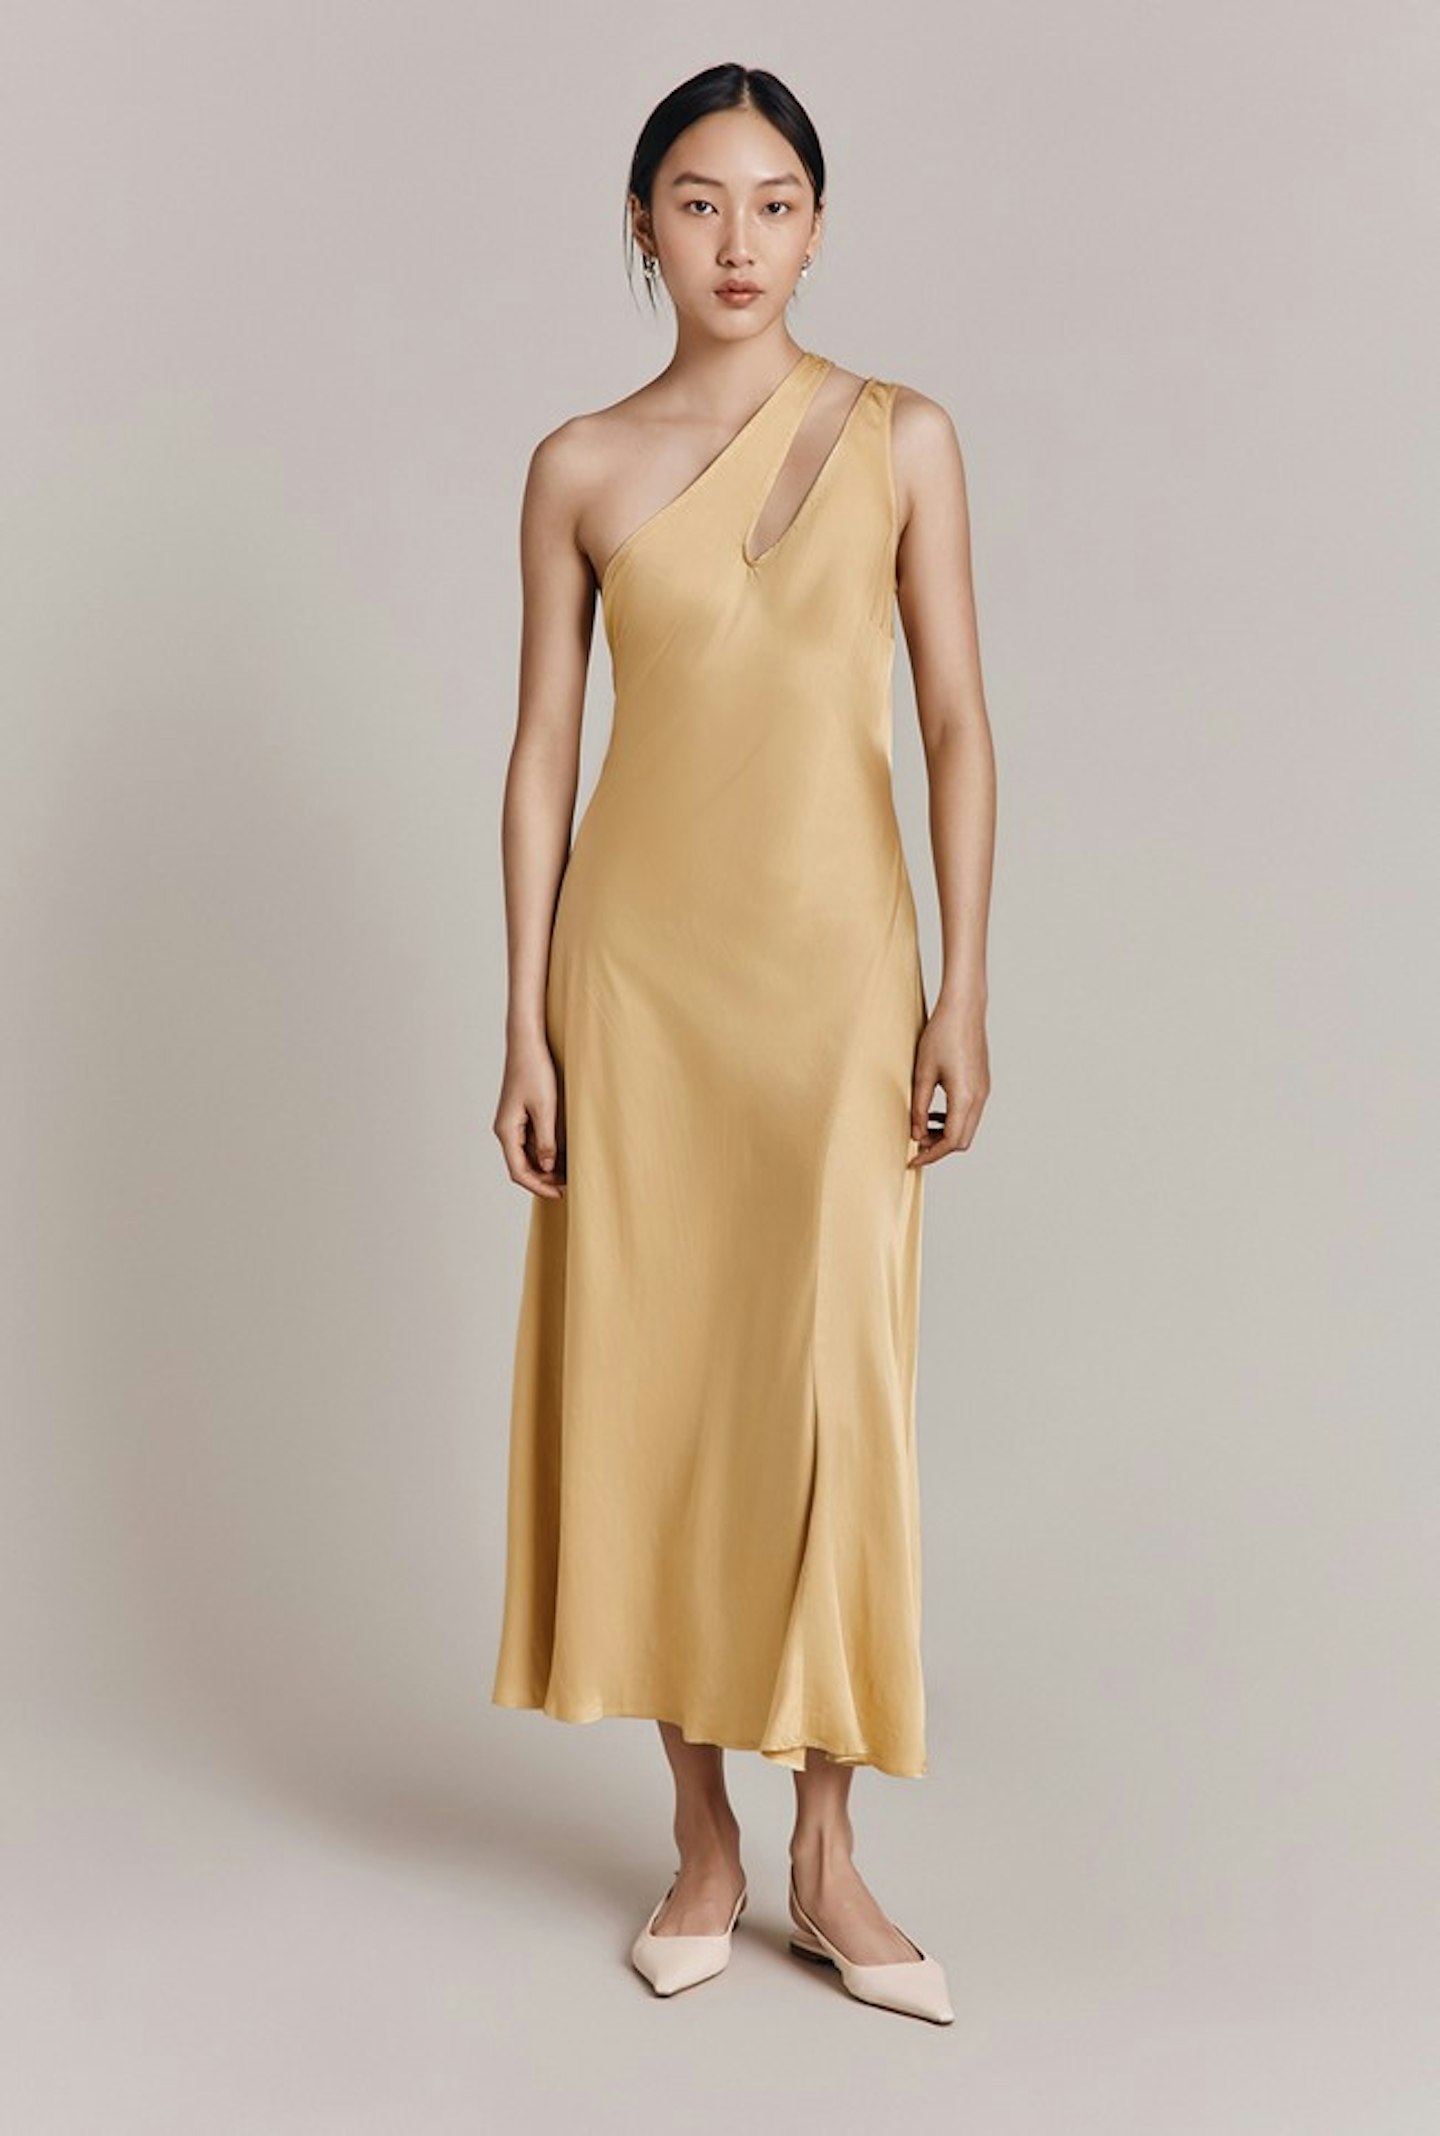 Ghost, Rose Yellow One-Shoulder Satin Midi Dress